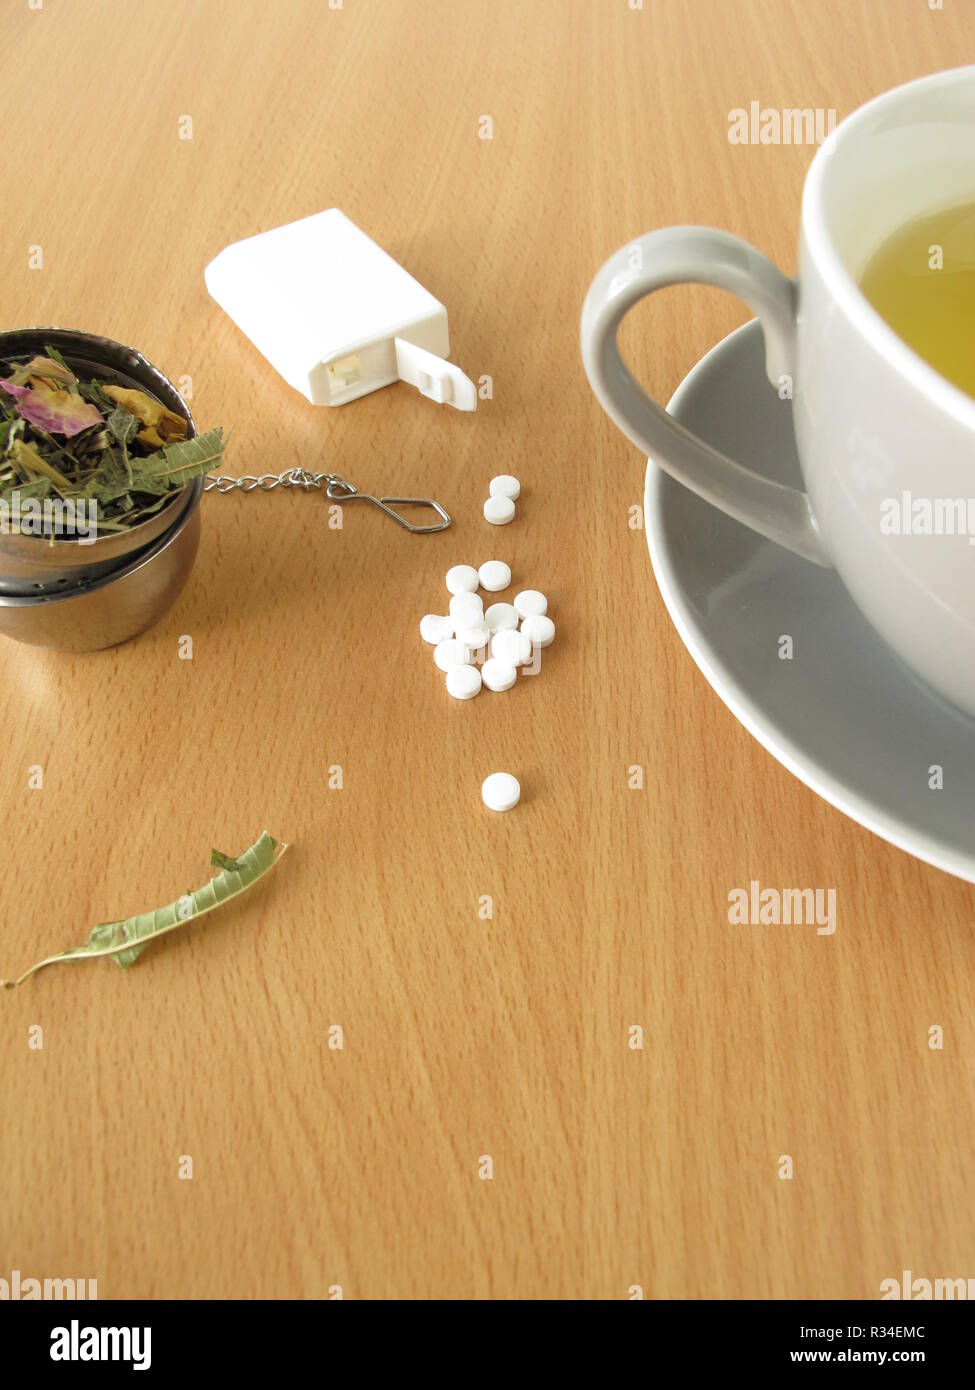 Kaffee mit Süßstoff Tabletten Stockfotografie - Alamy